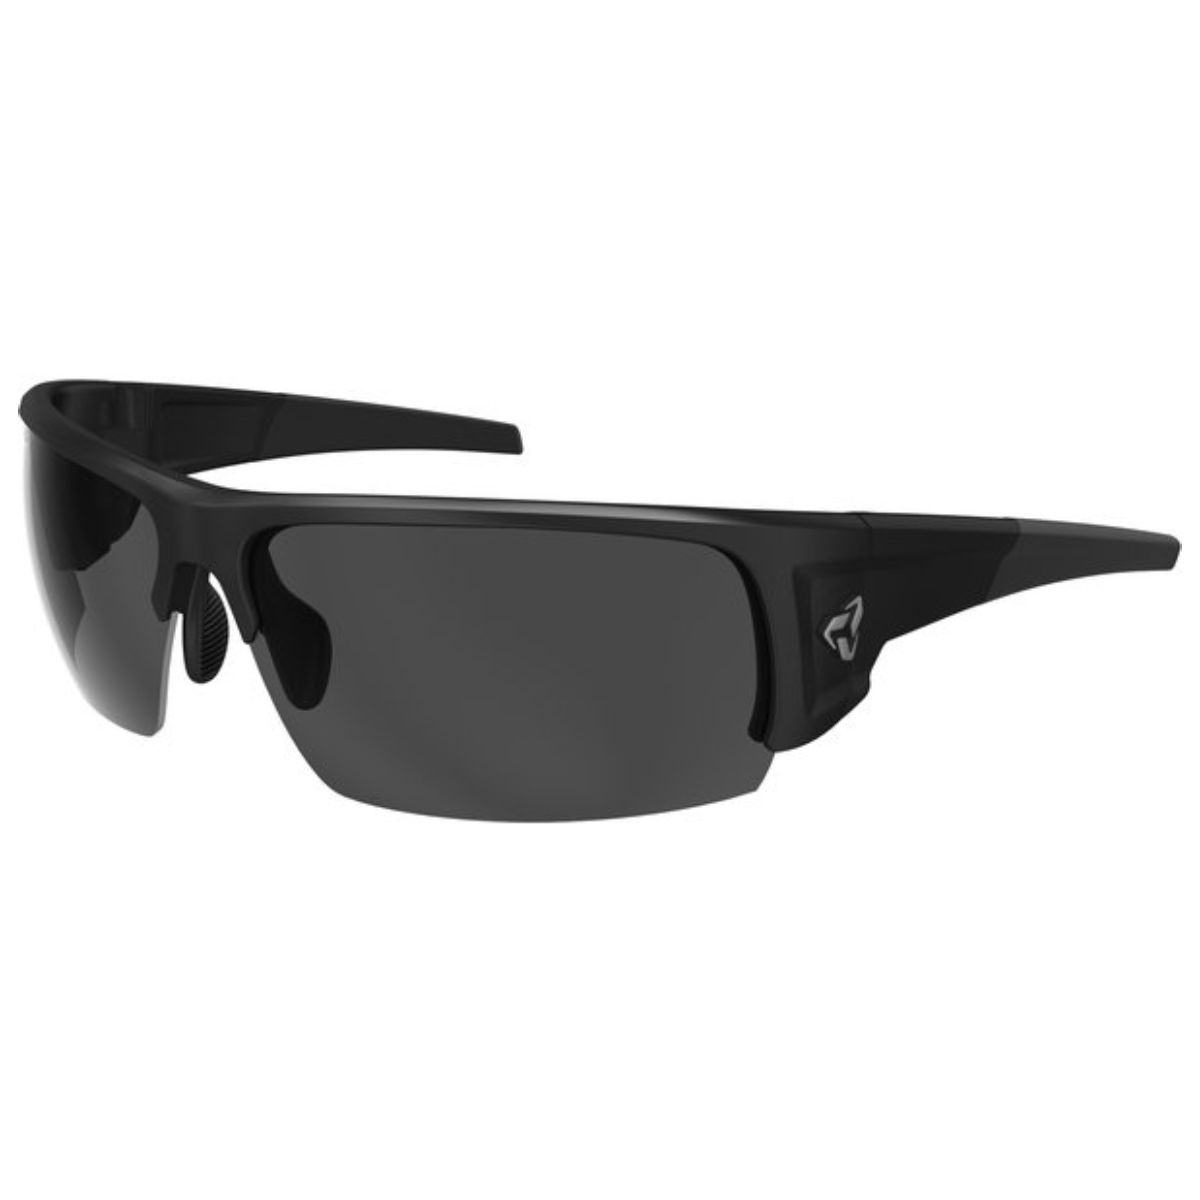 Ryders Caliber Sunglasses Black Matt - Grey Lens 